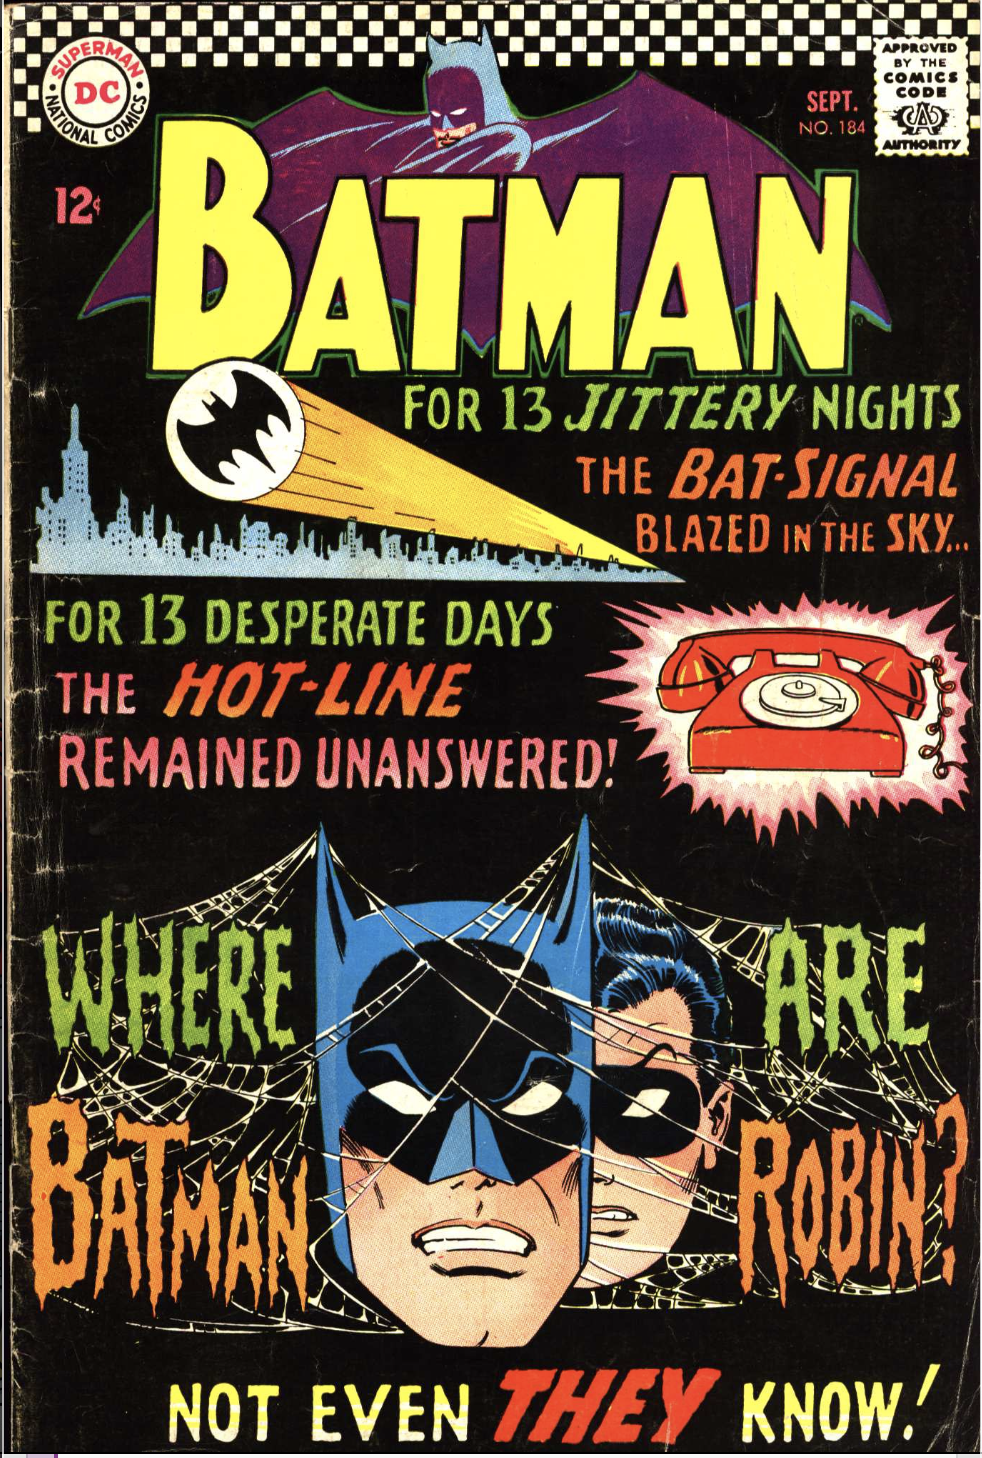 Fly, Robin, Fly (Batman 184)